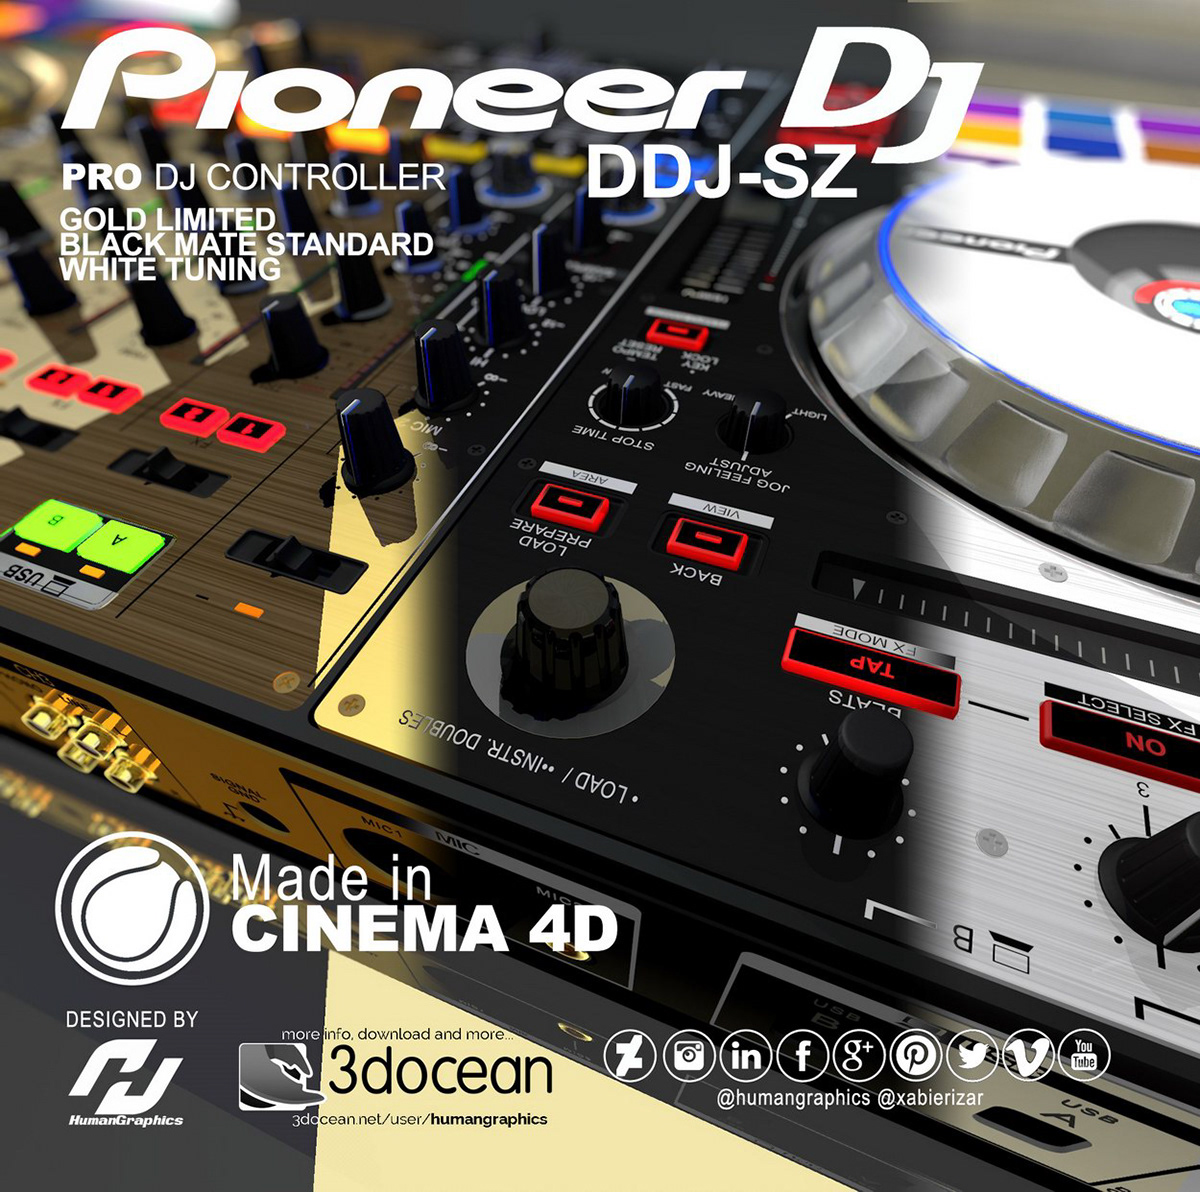 cinema 4d c4d 3D Render DJ controller turntables Pioneer pioneer dj cdj dj